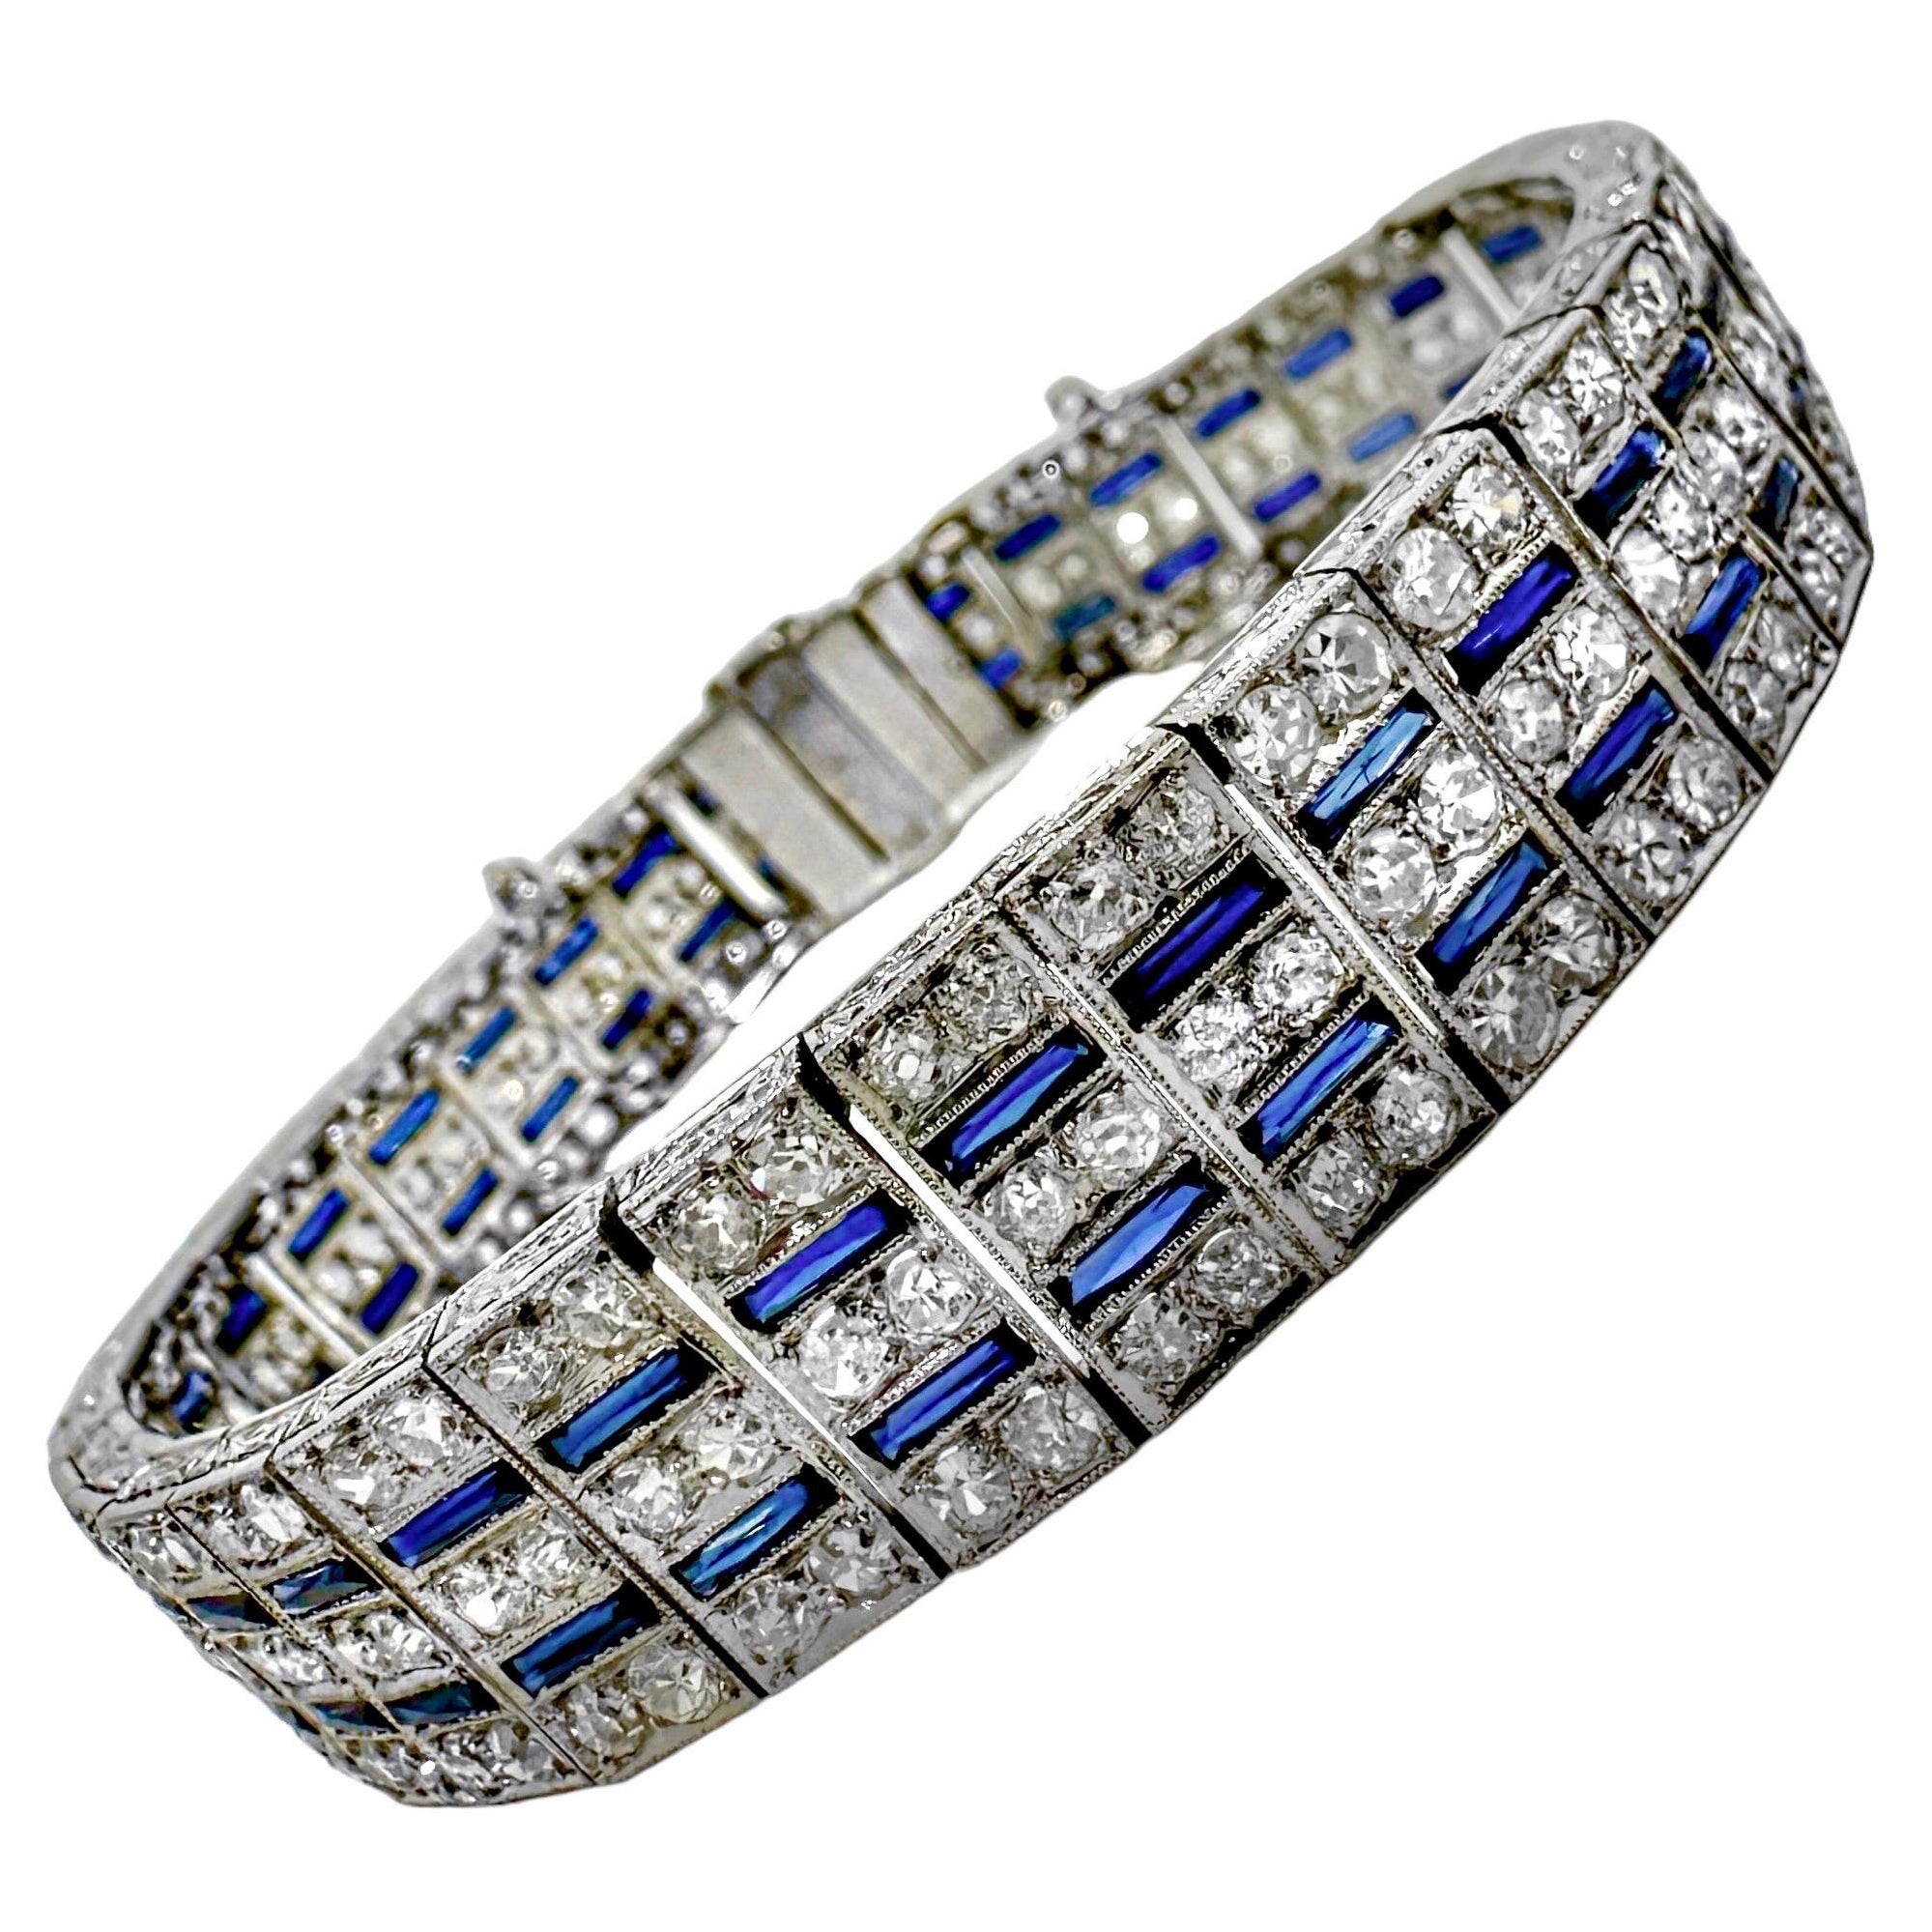 Classic Art-Deco Platinum, Diamond and Synthetic Sapphire Bracelet 1/2 Inch Wide